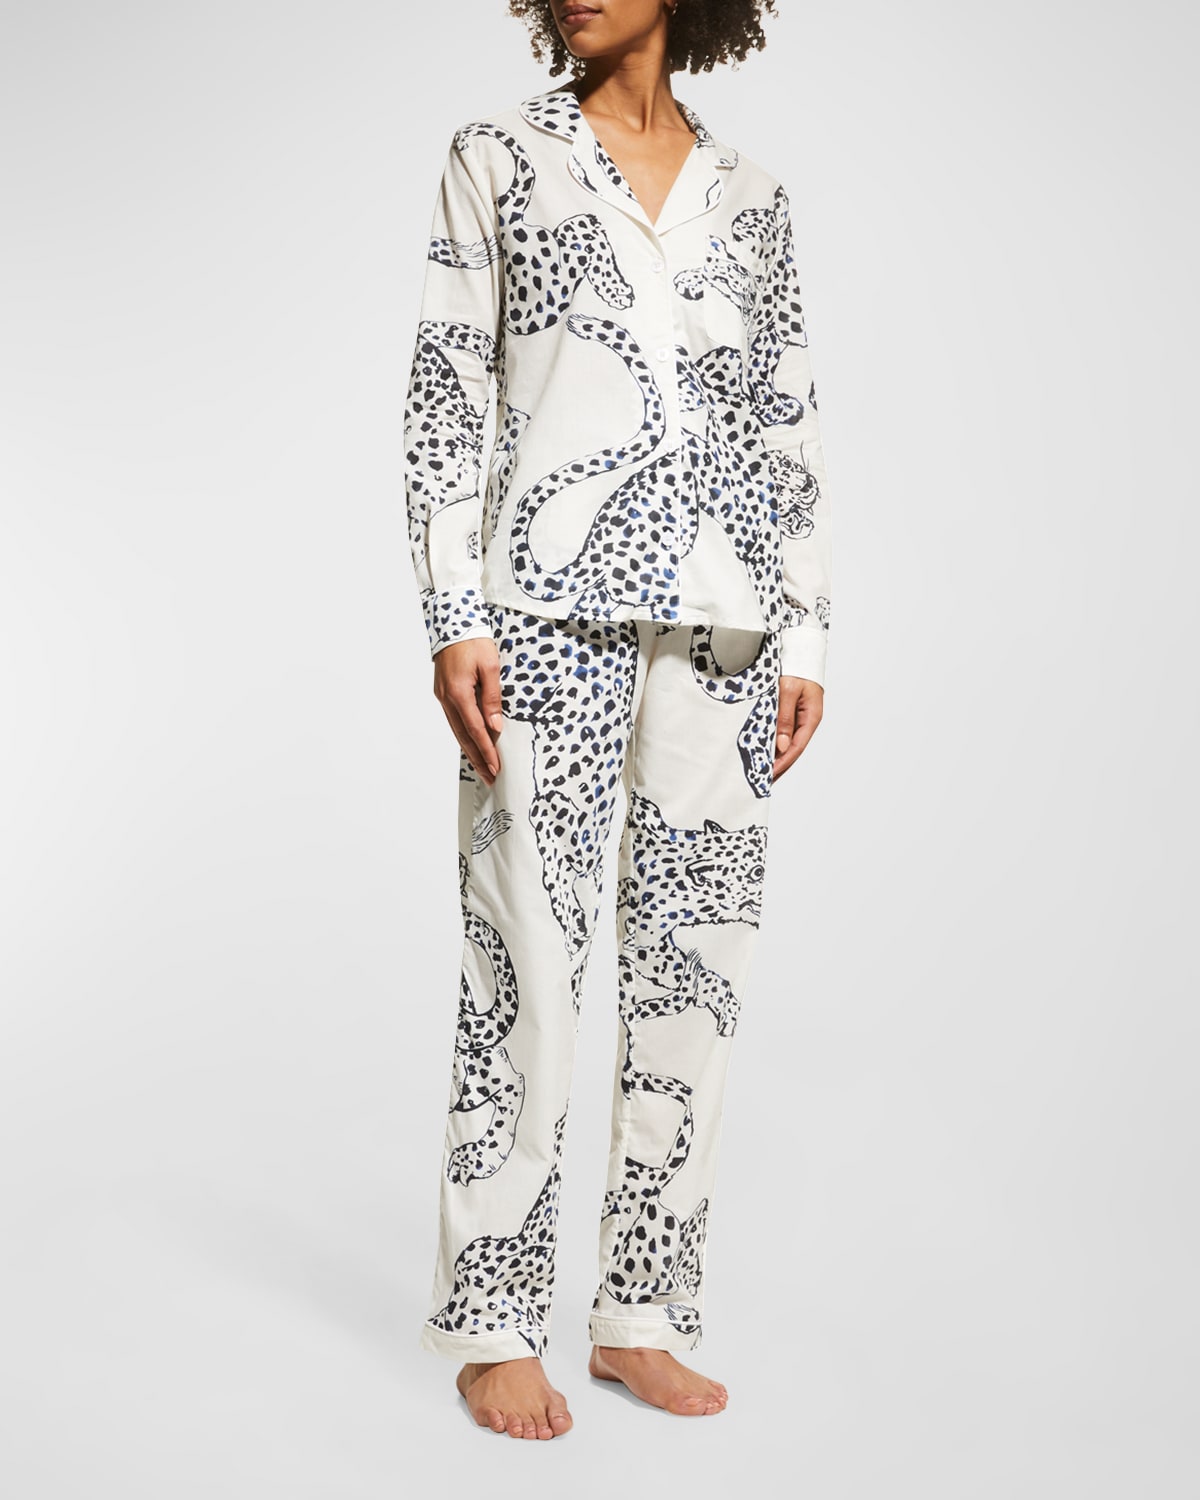 Desmond & Dempsey Large Leopard Long-sleeve Pajama Set In White